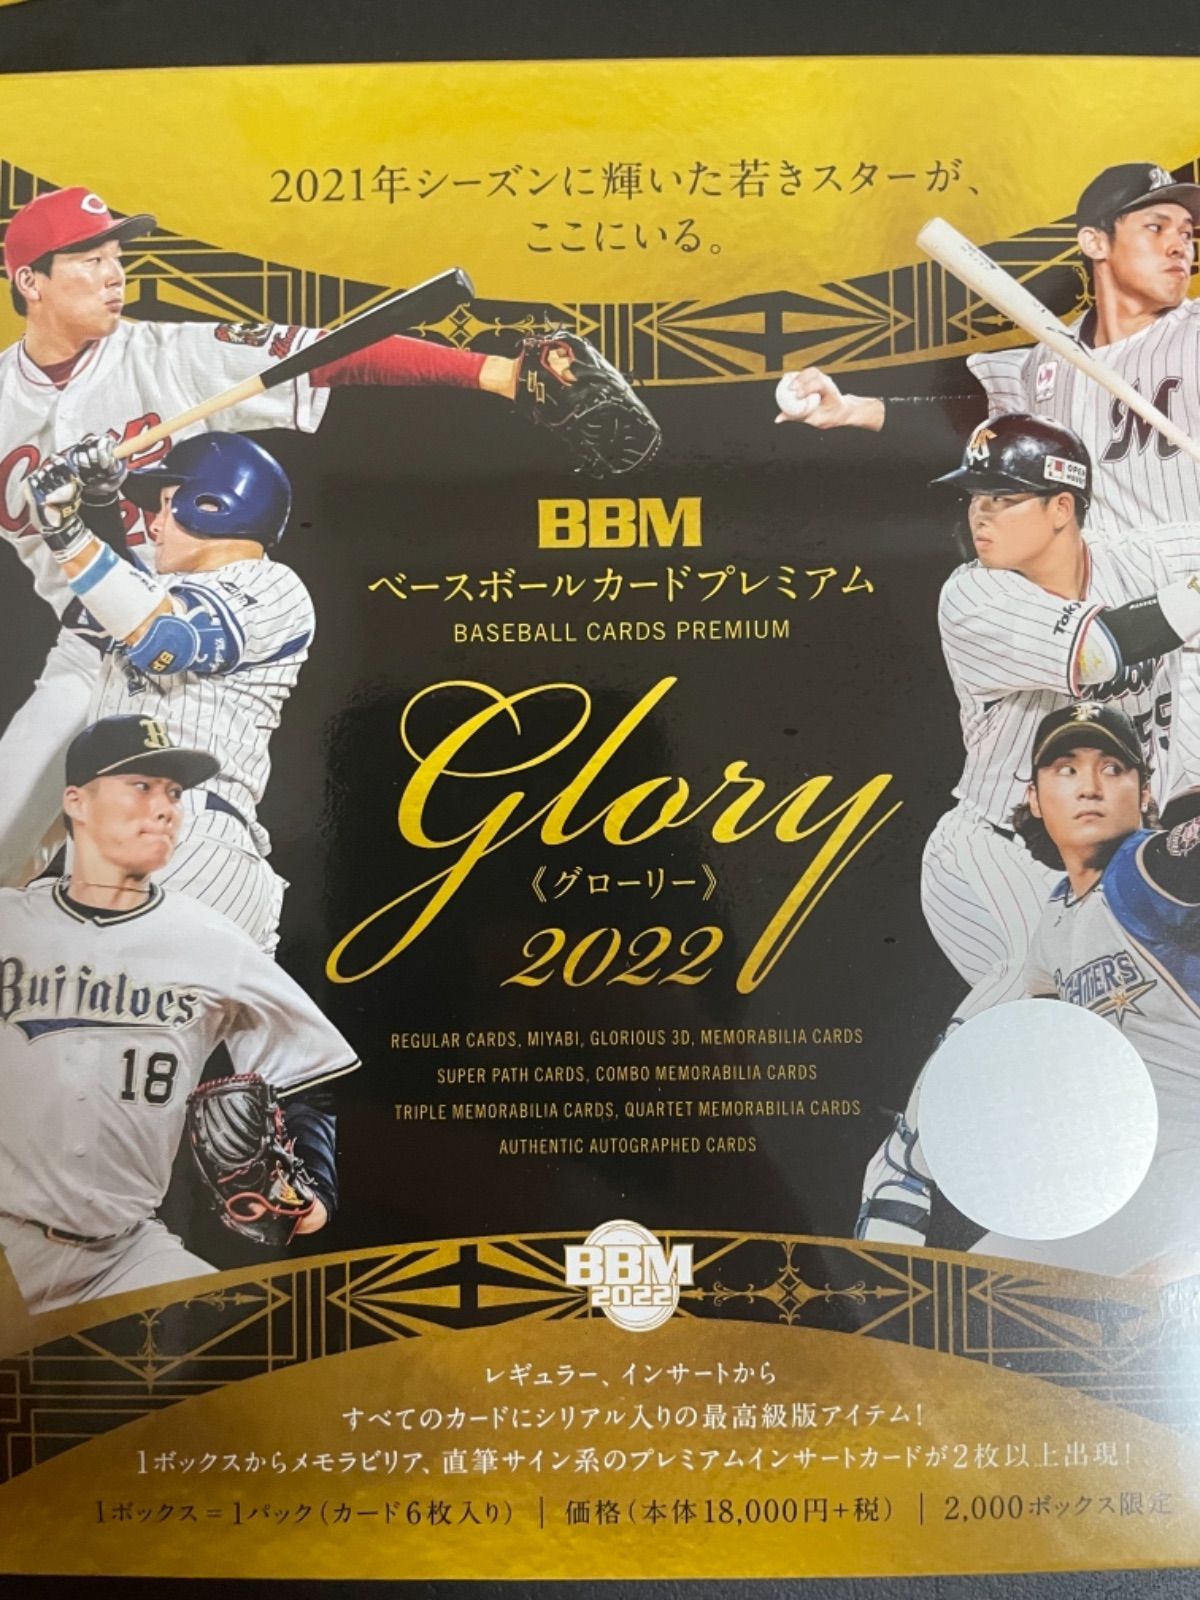 BBM gloryグローリー 未開封BOX-eastgate.mk